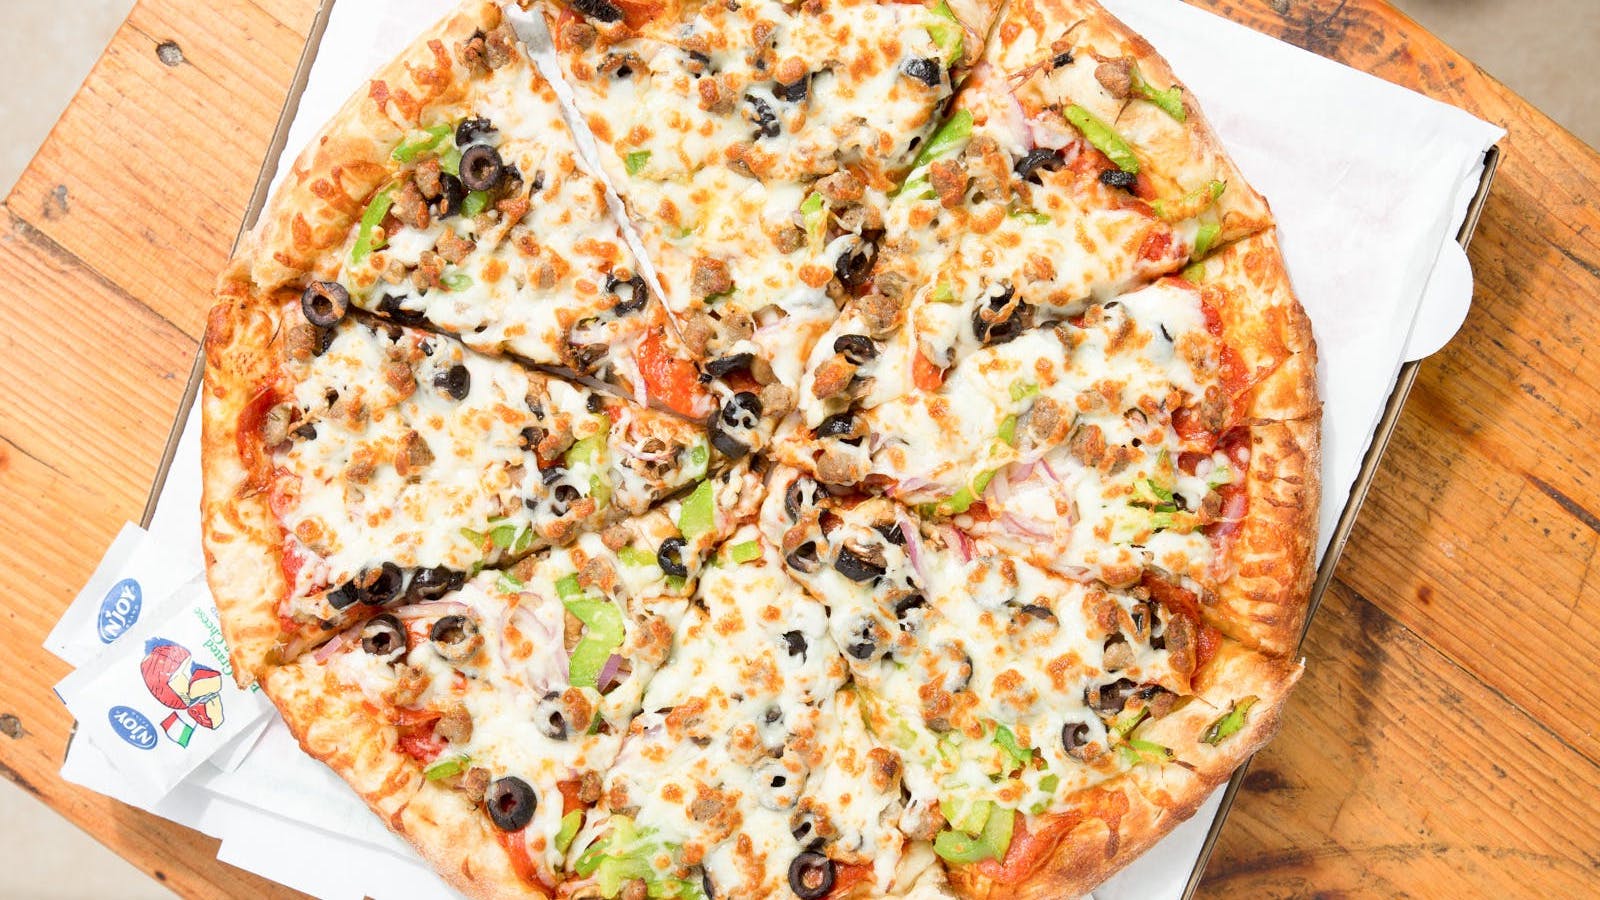 Bambino's Pizza & Deli #3 - Lemon Grove hero